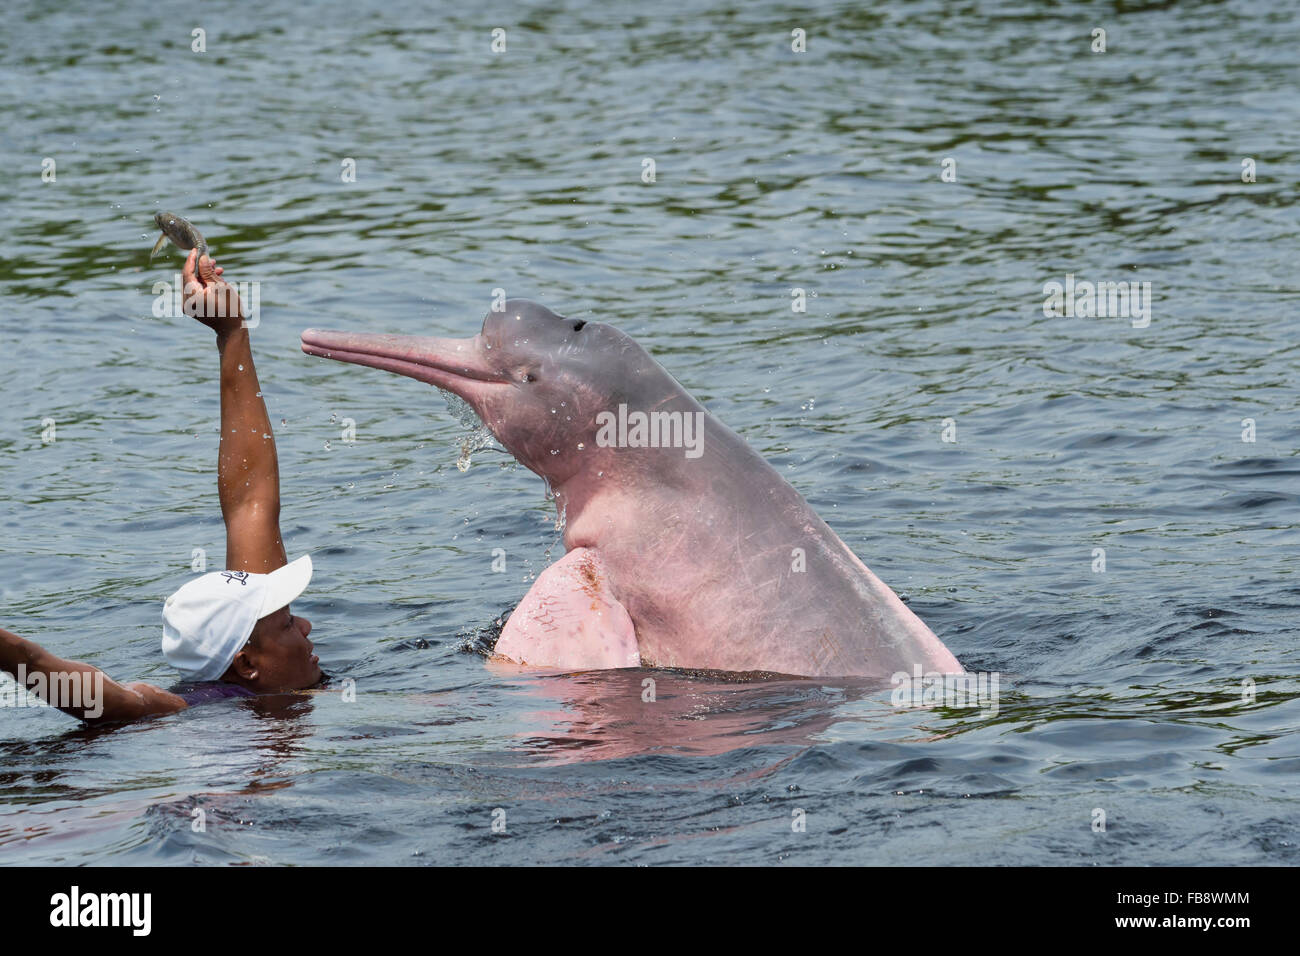 Rosa amazonas delphin -Fotos und -Bildmaterial in hoher Auflösung – Alamy